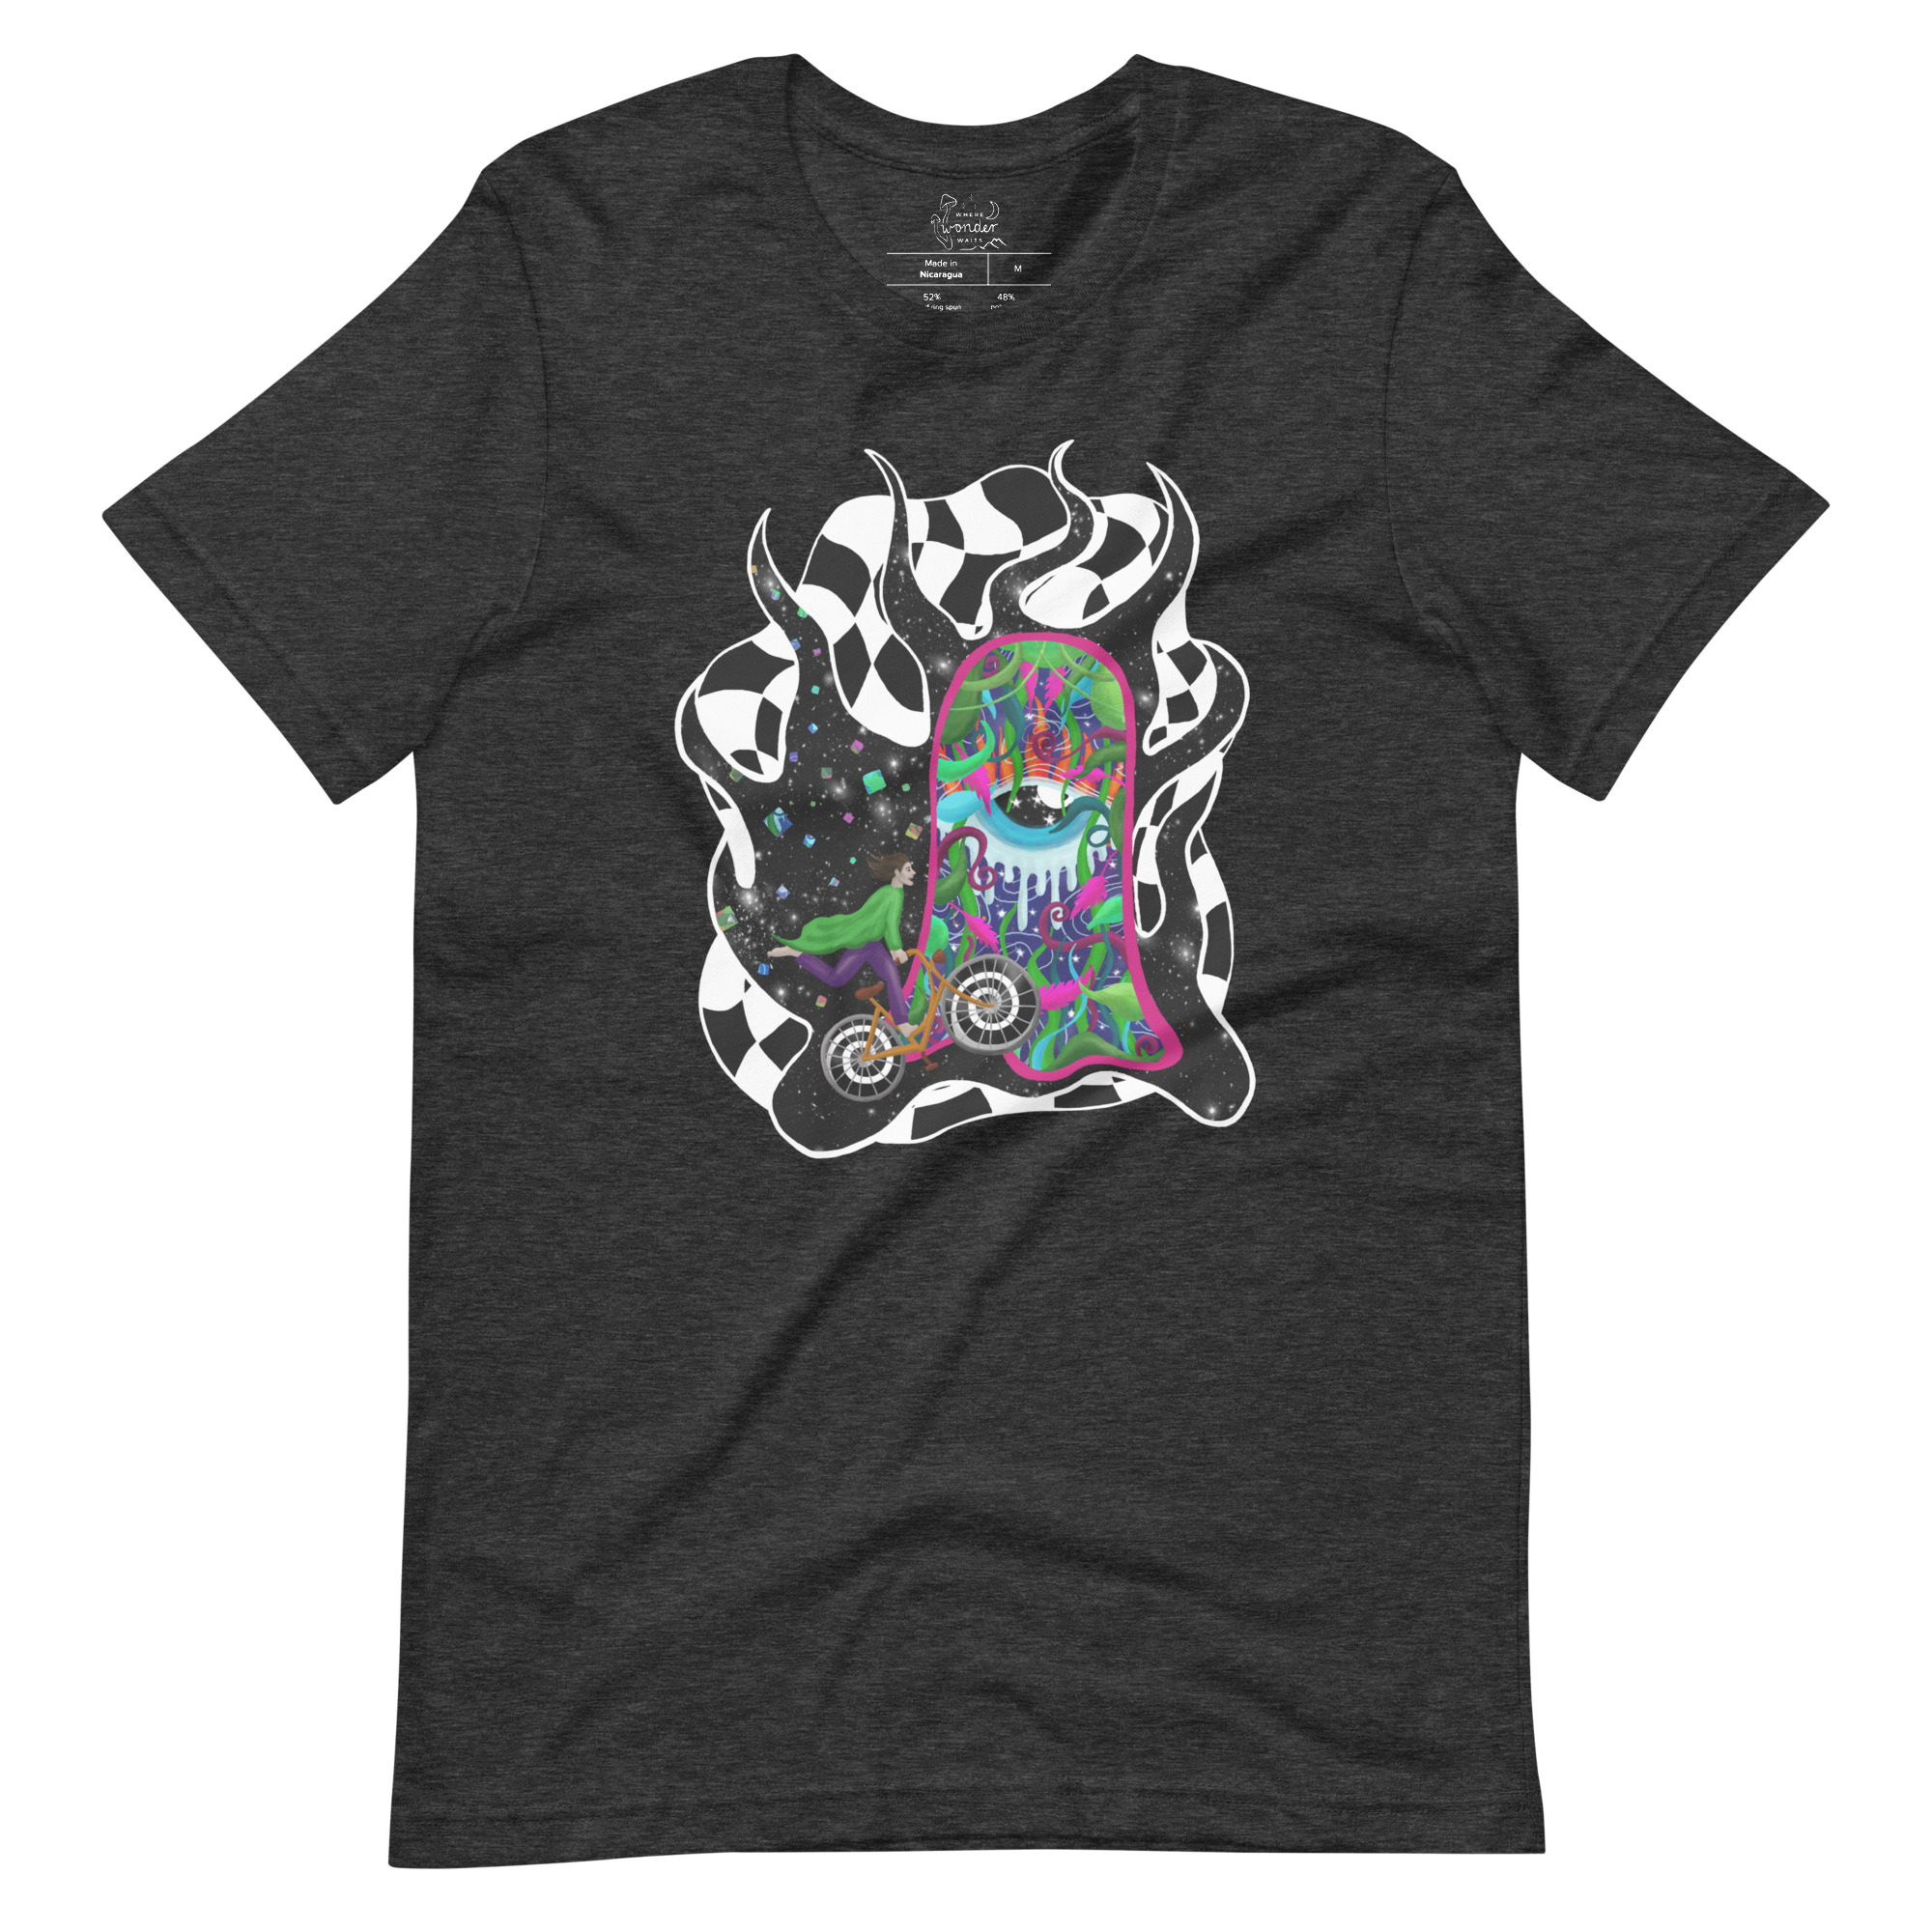 Bicycle Day (LSD) - Printed Art T-Shirt - Where Wonder Waits